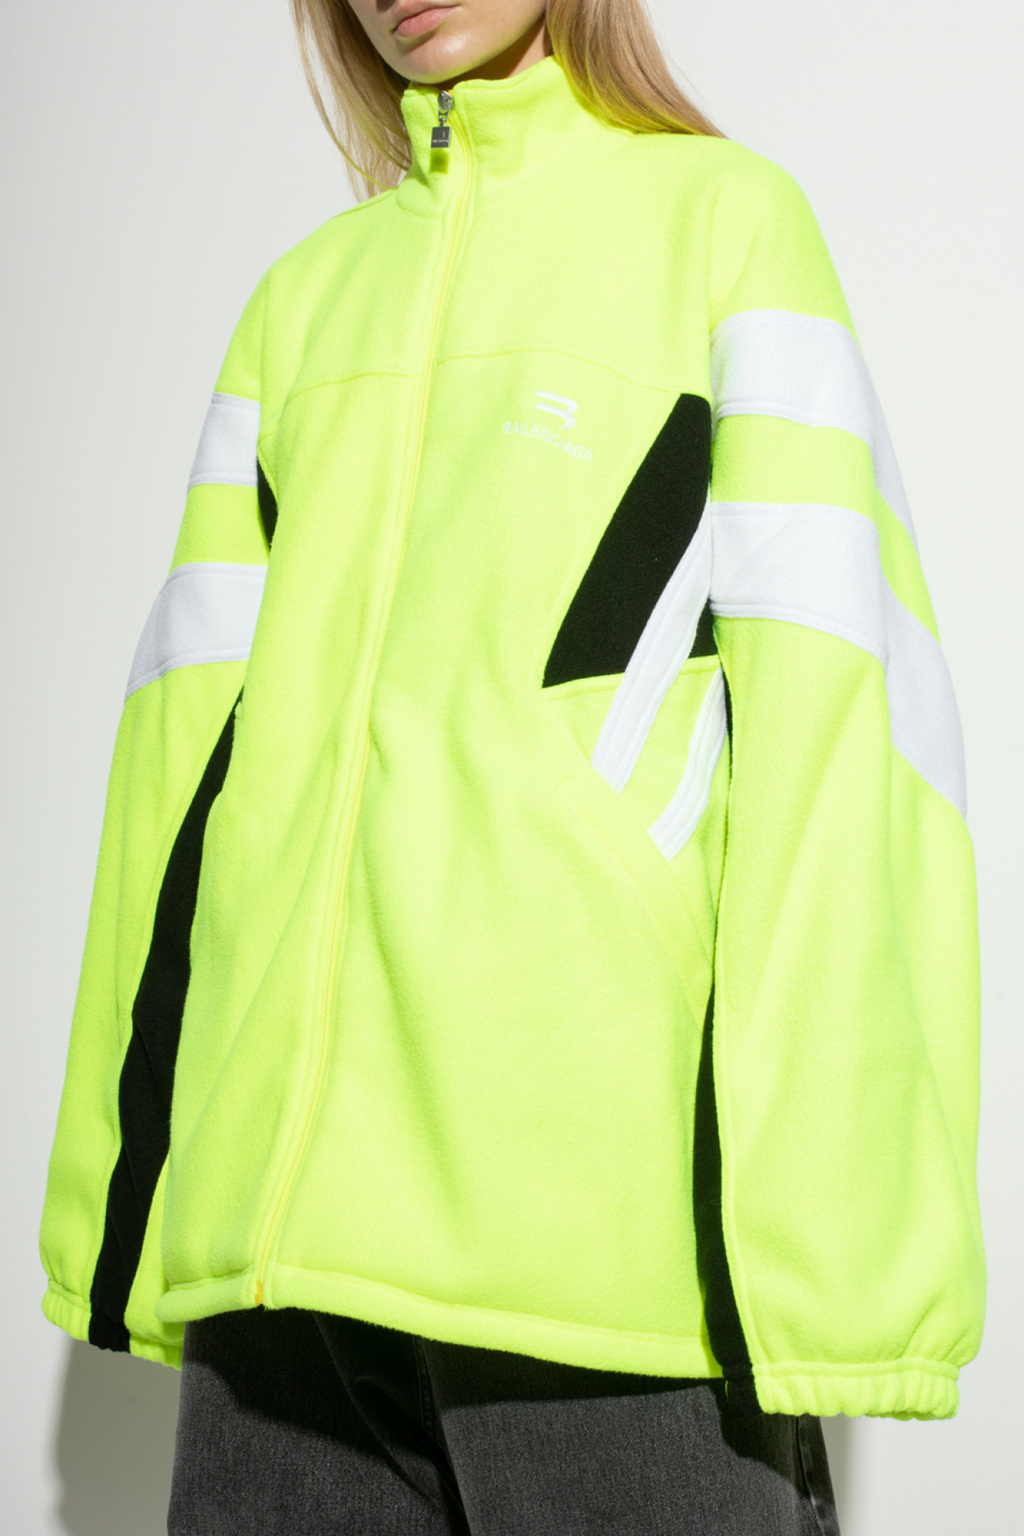 Balenciaga Neon Track Jacket